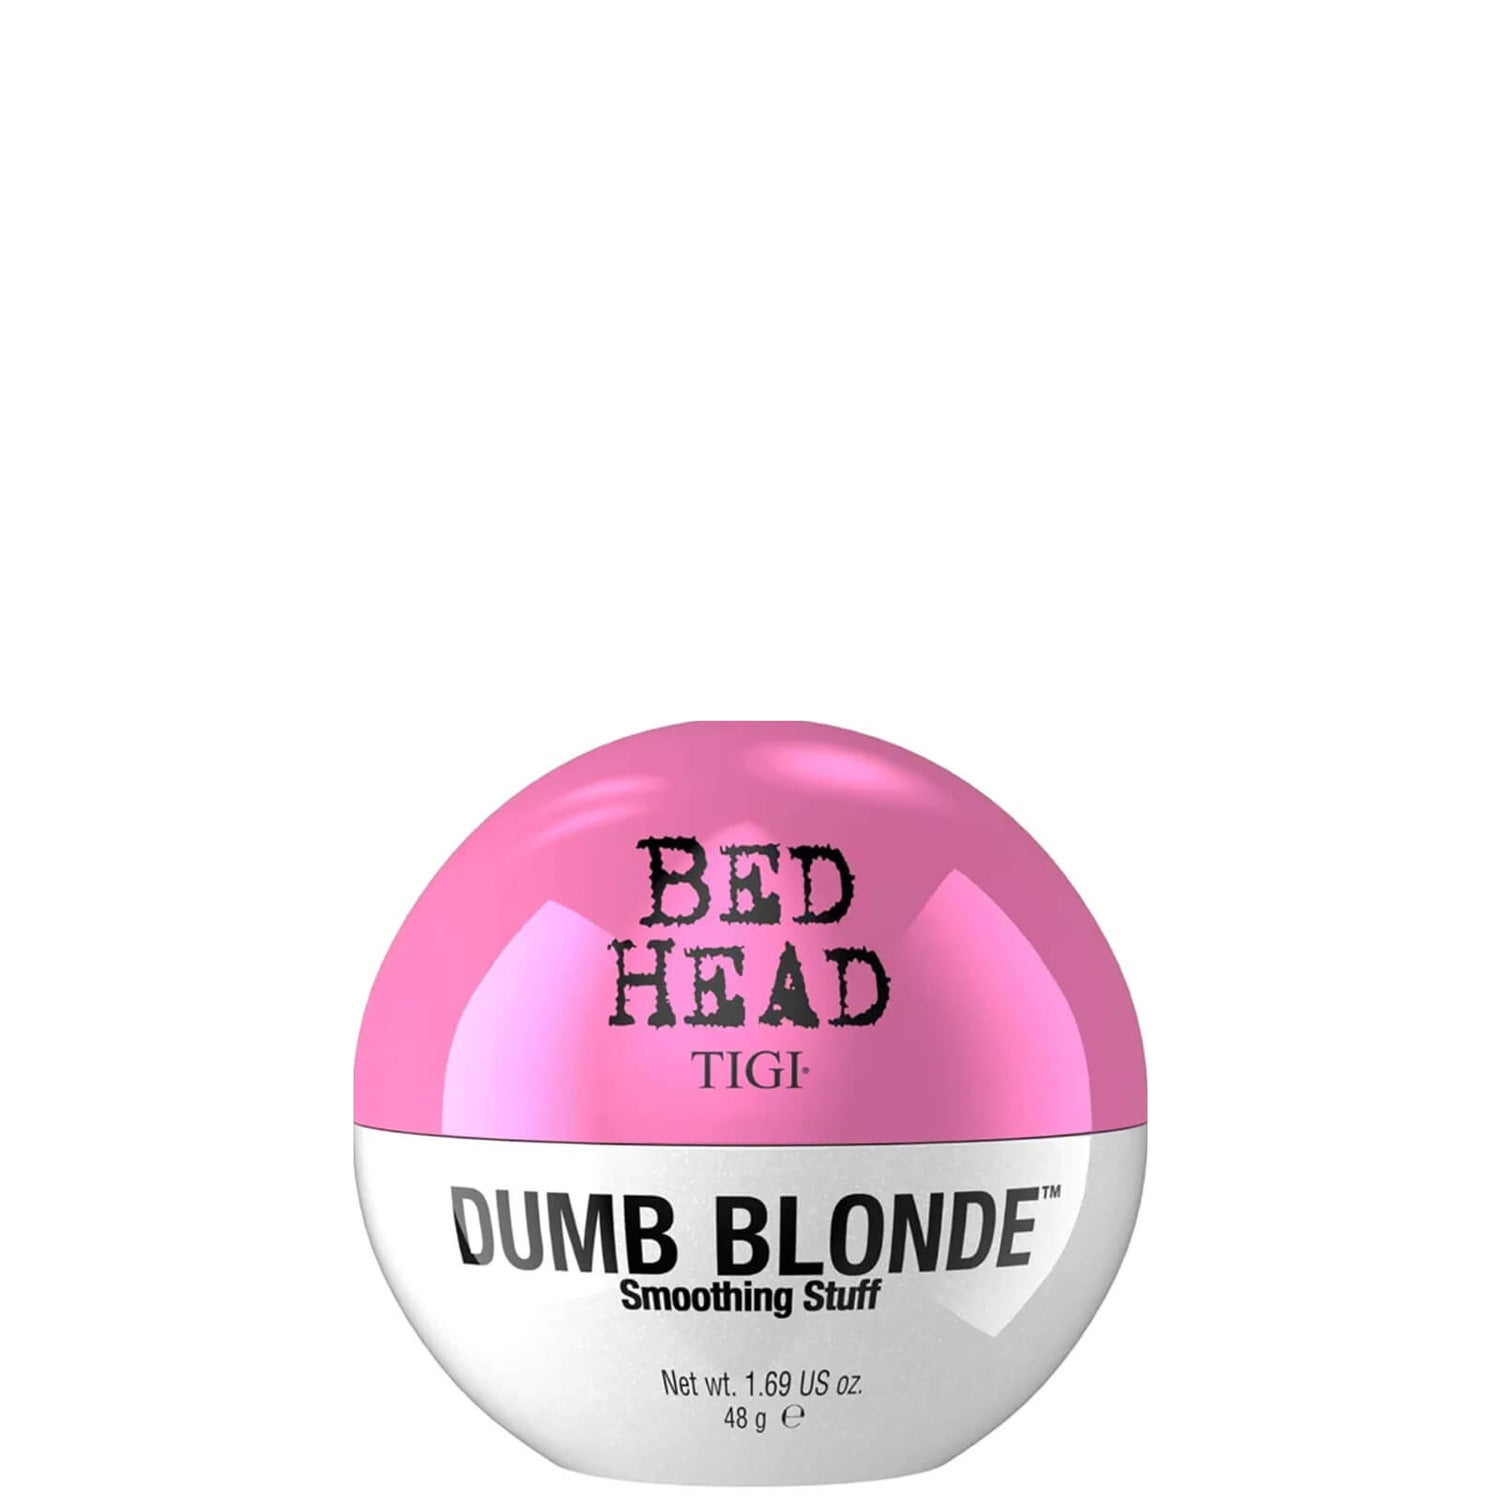 Gel Bed Head Dumb Blonde Smoothing Stuff da TIGI (42 g)